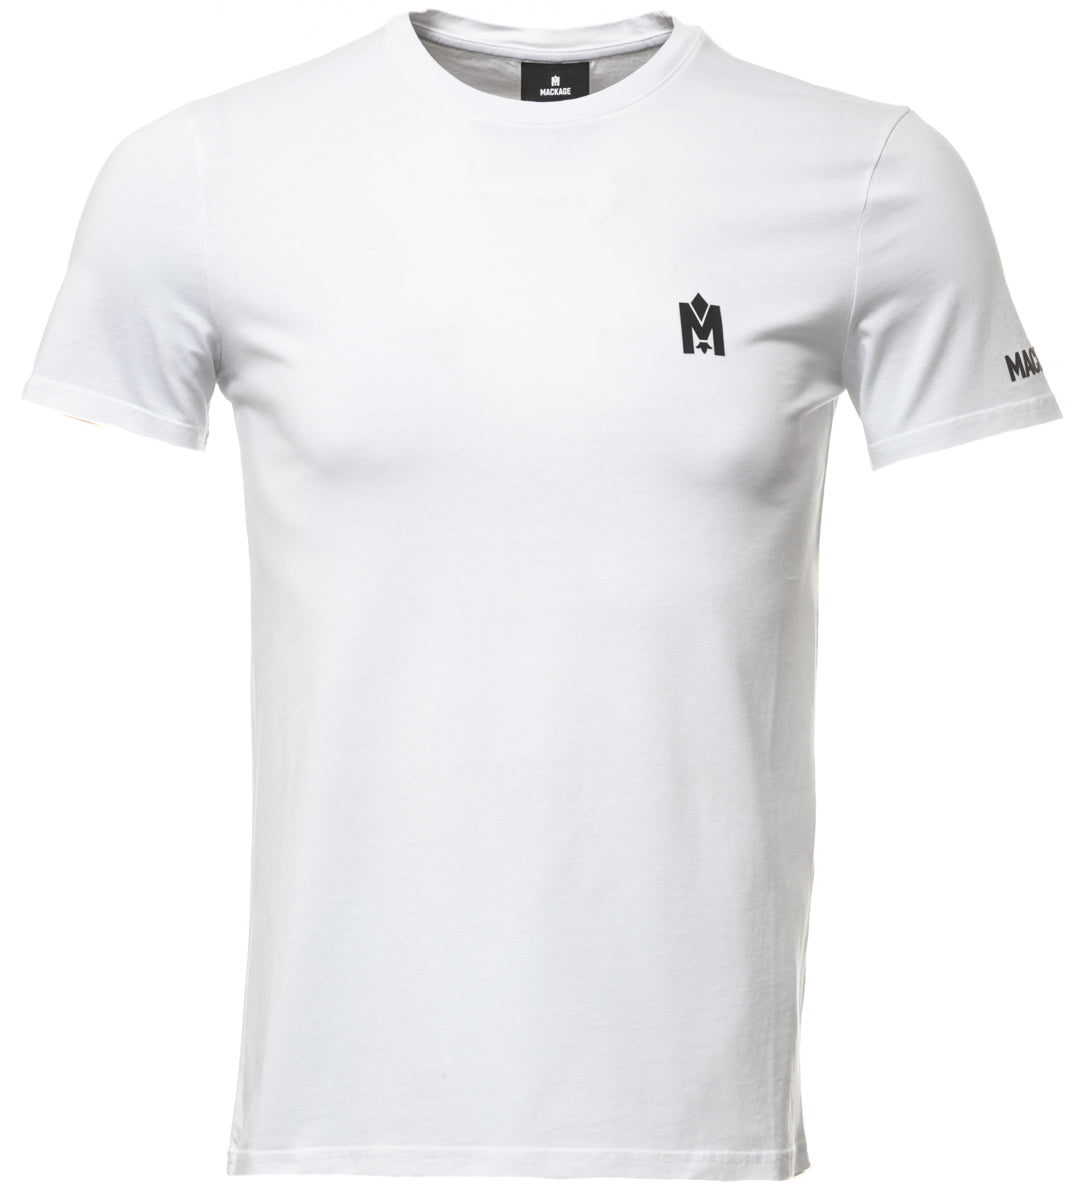 Mackage Ace-Z T Shirt in White